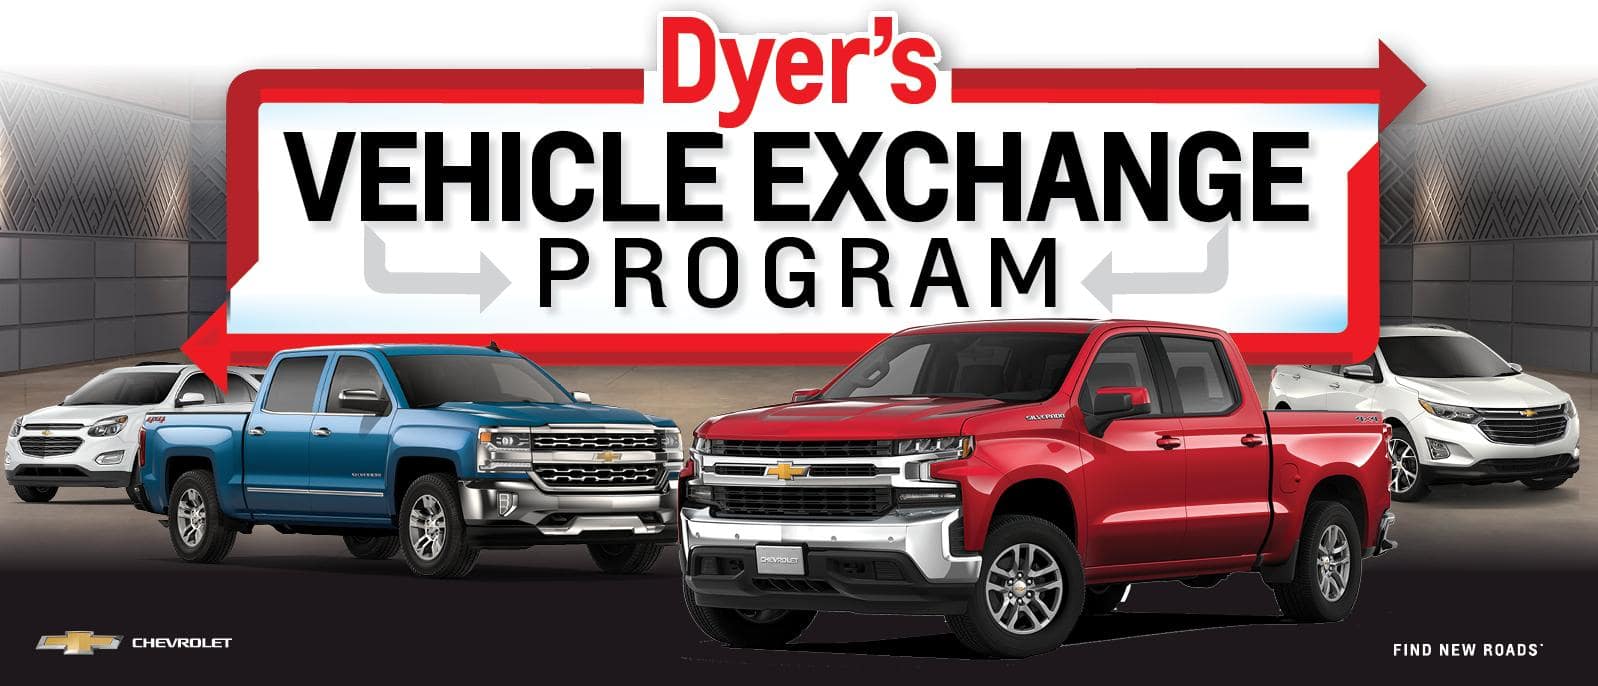 Dyer's Vehicle Exchange Program banner